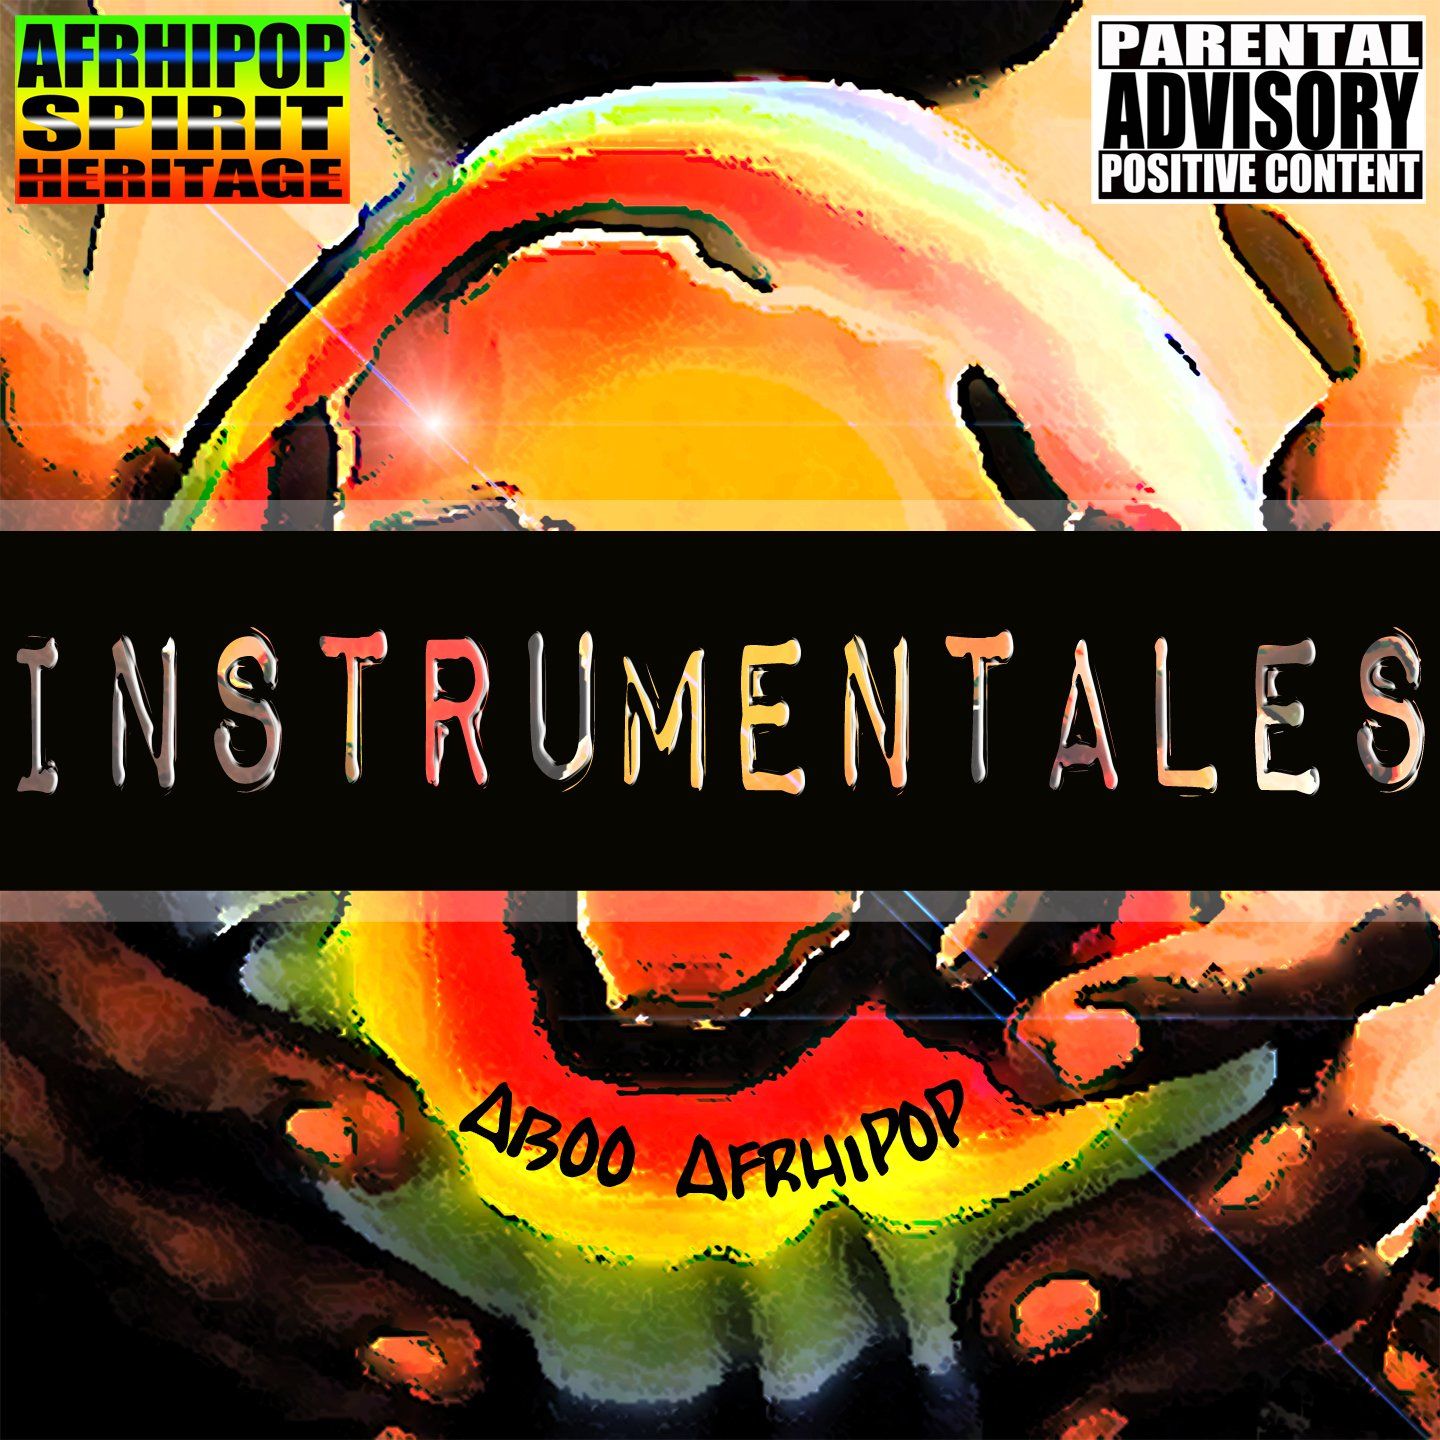 Visuel pochette Album Afrhipop Spirit Heritage version Instrumentale de l'Artiste Aboo AfrHipoP